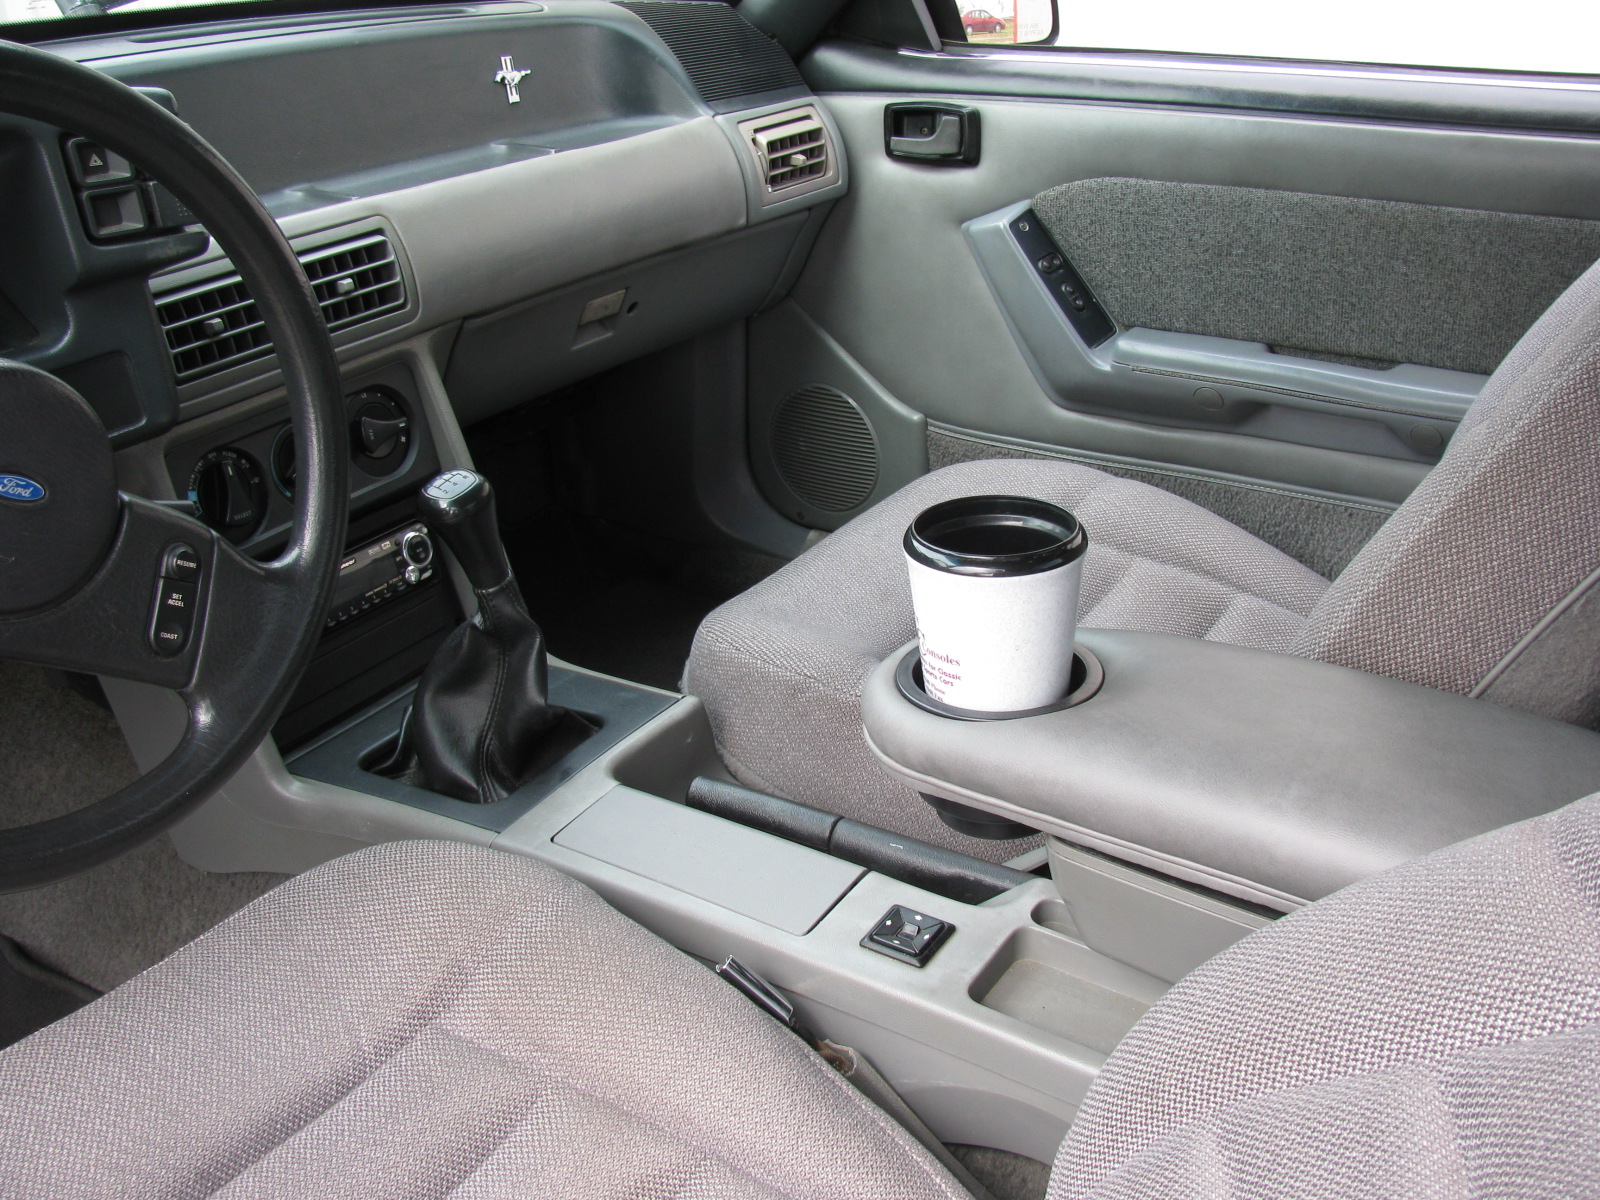 1987-1993 Ford Mustang armrest with Drink holder